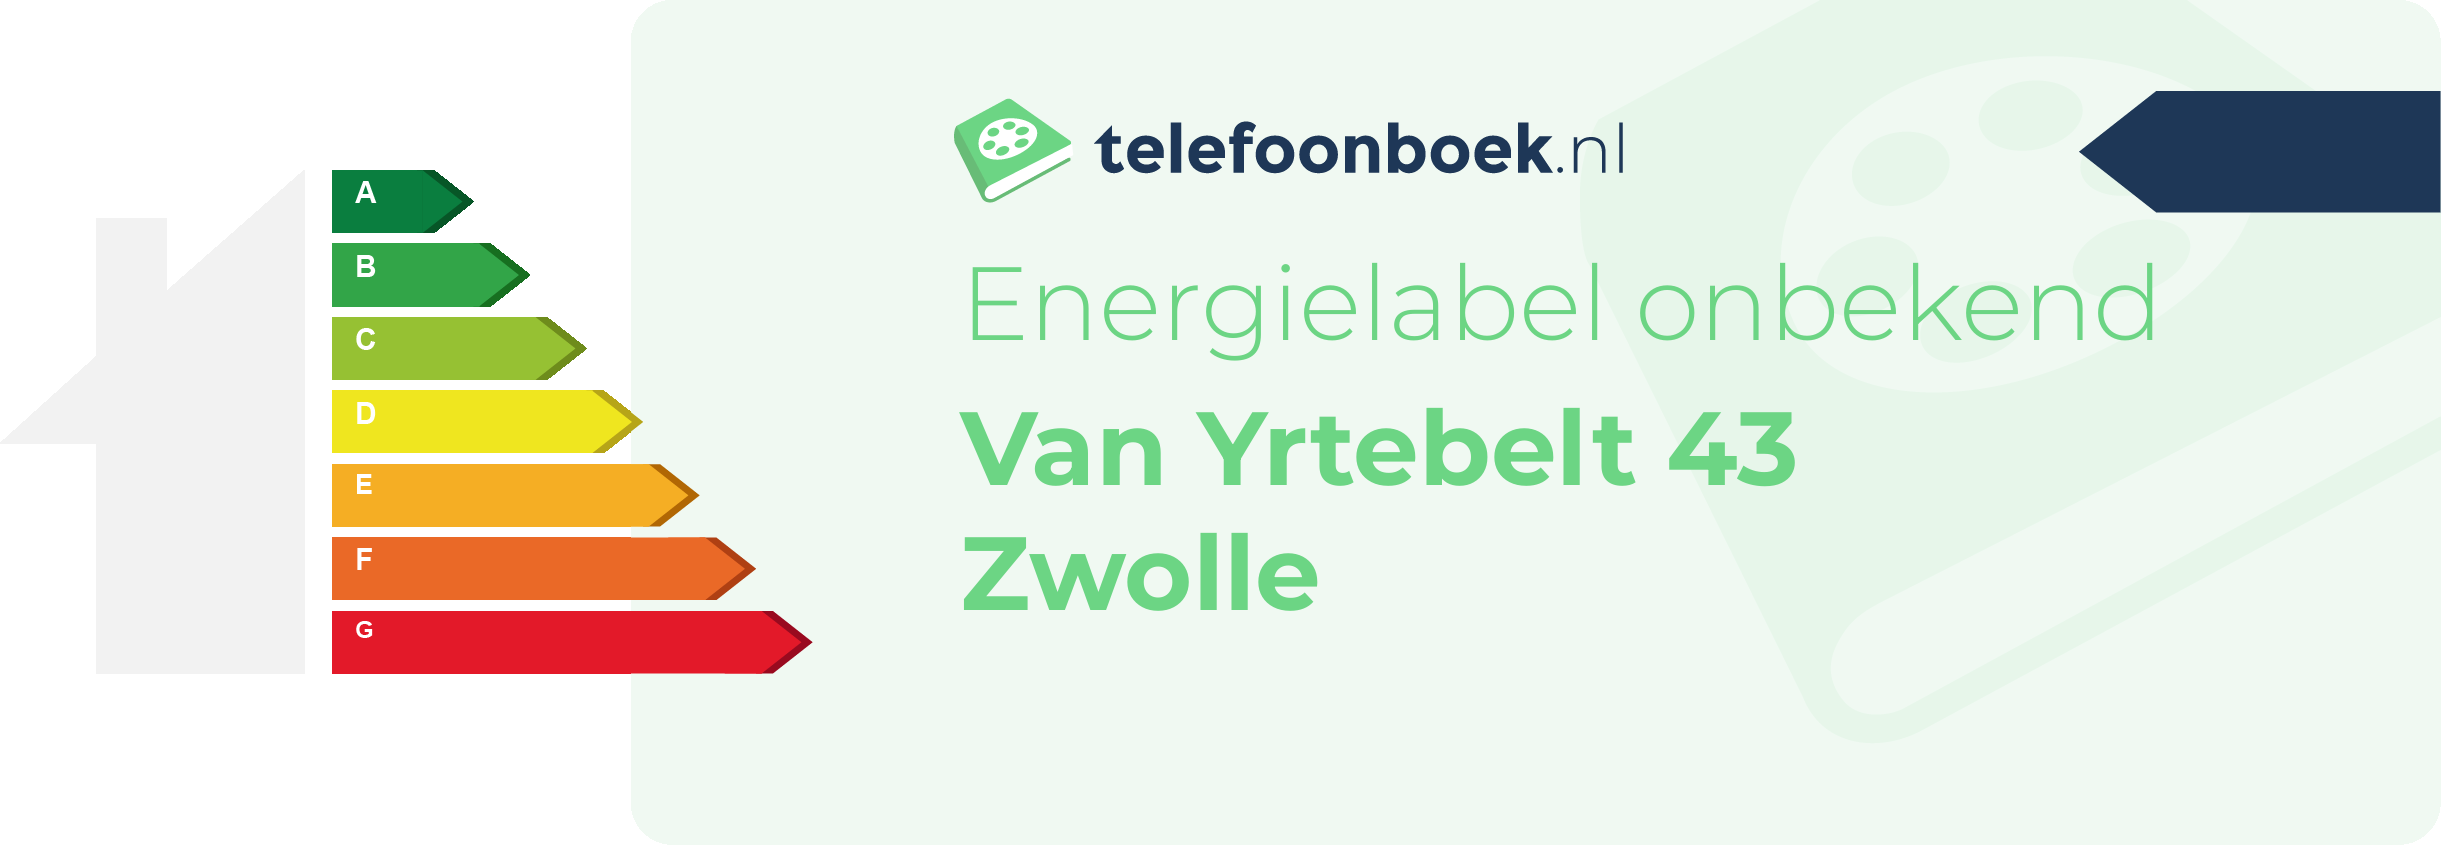 Energielabel Van Yrtebelt 43 Zwolle